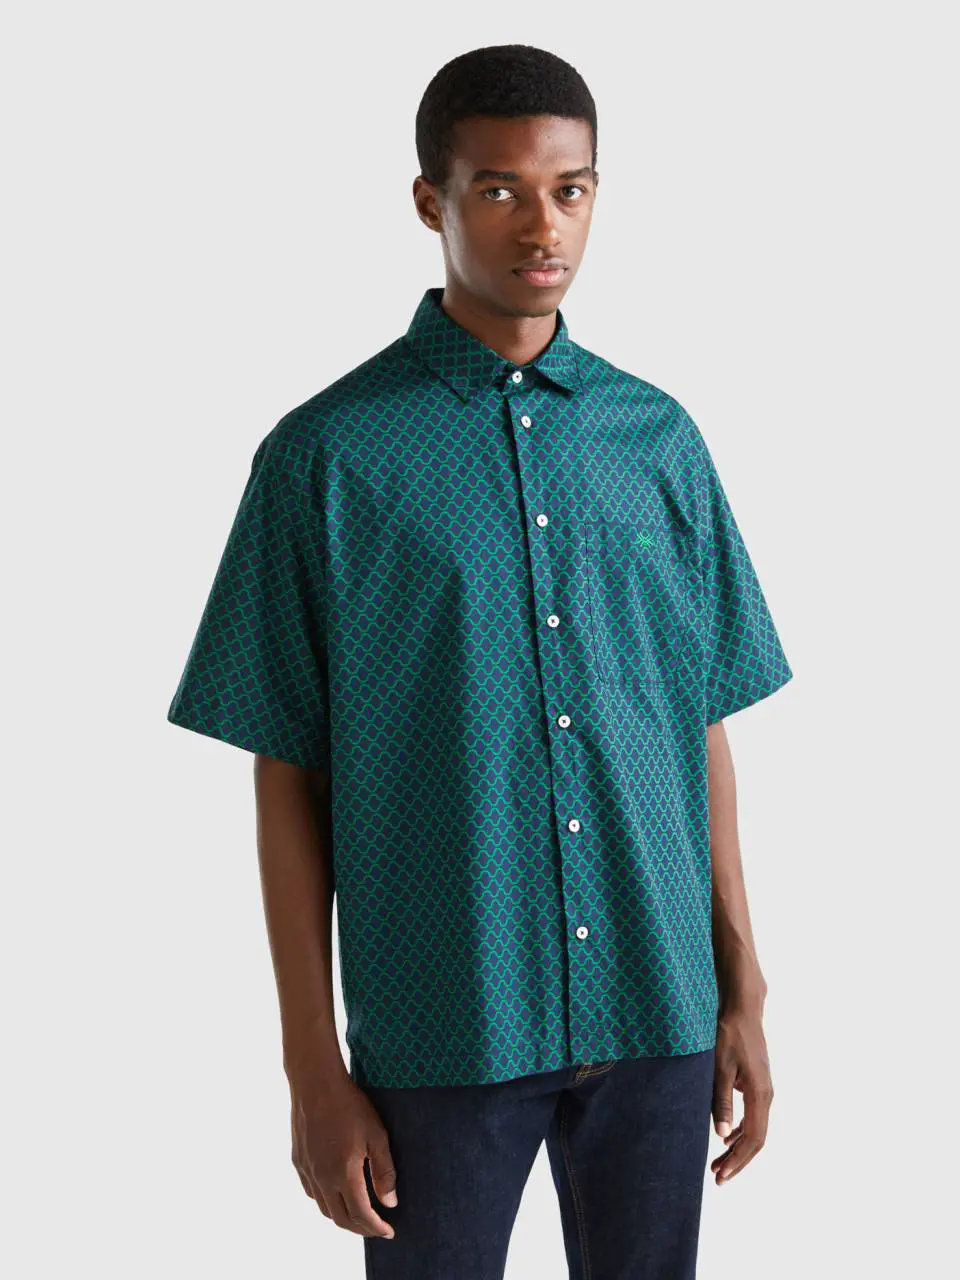 Benetton shirt with wavy motif. 1